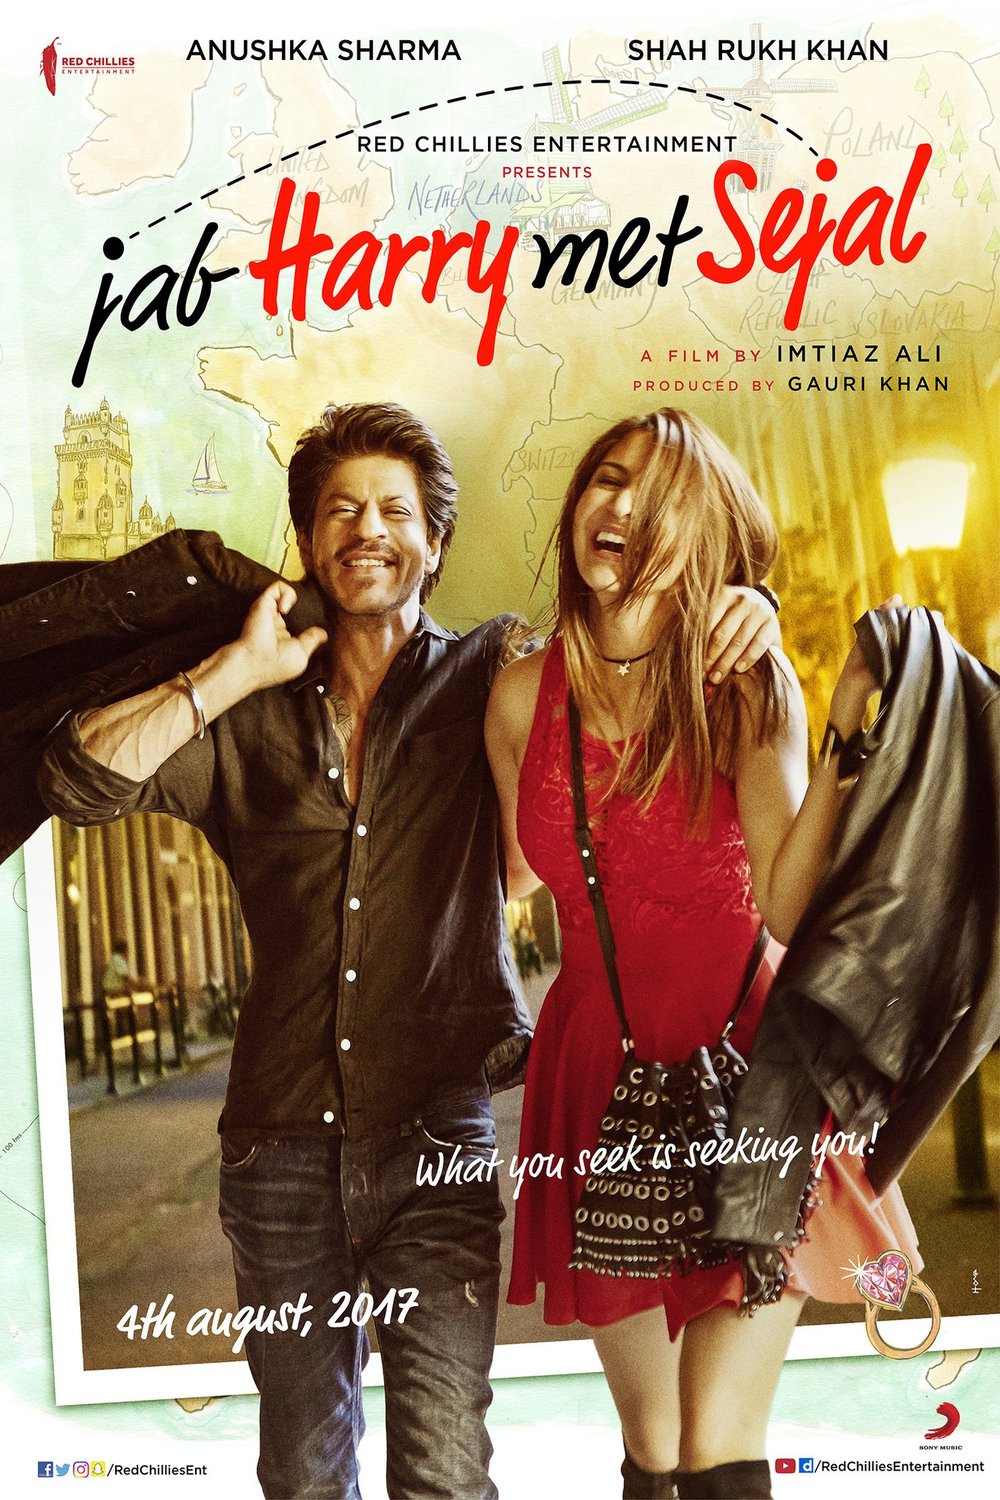 Poster of the movie Jab Harry met Sejal